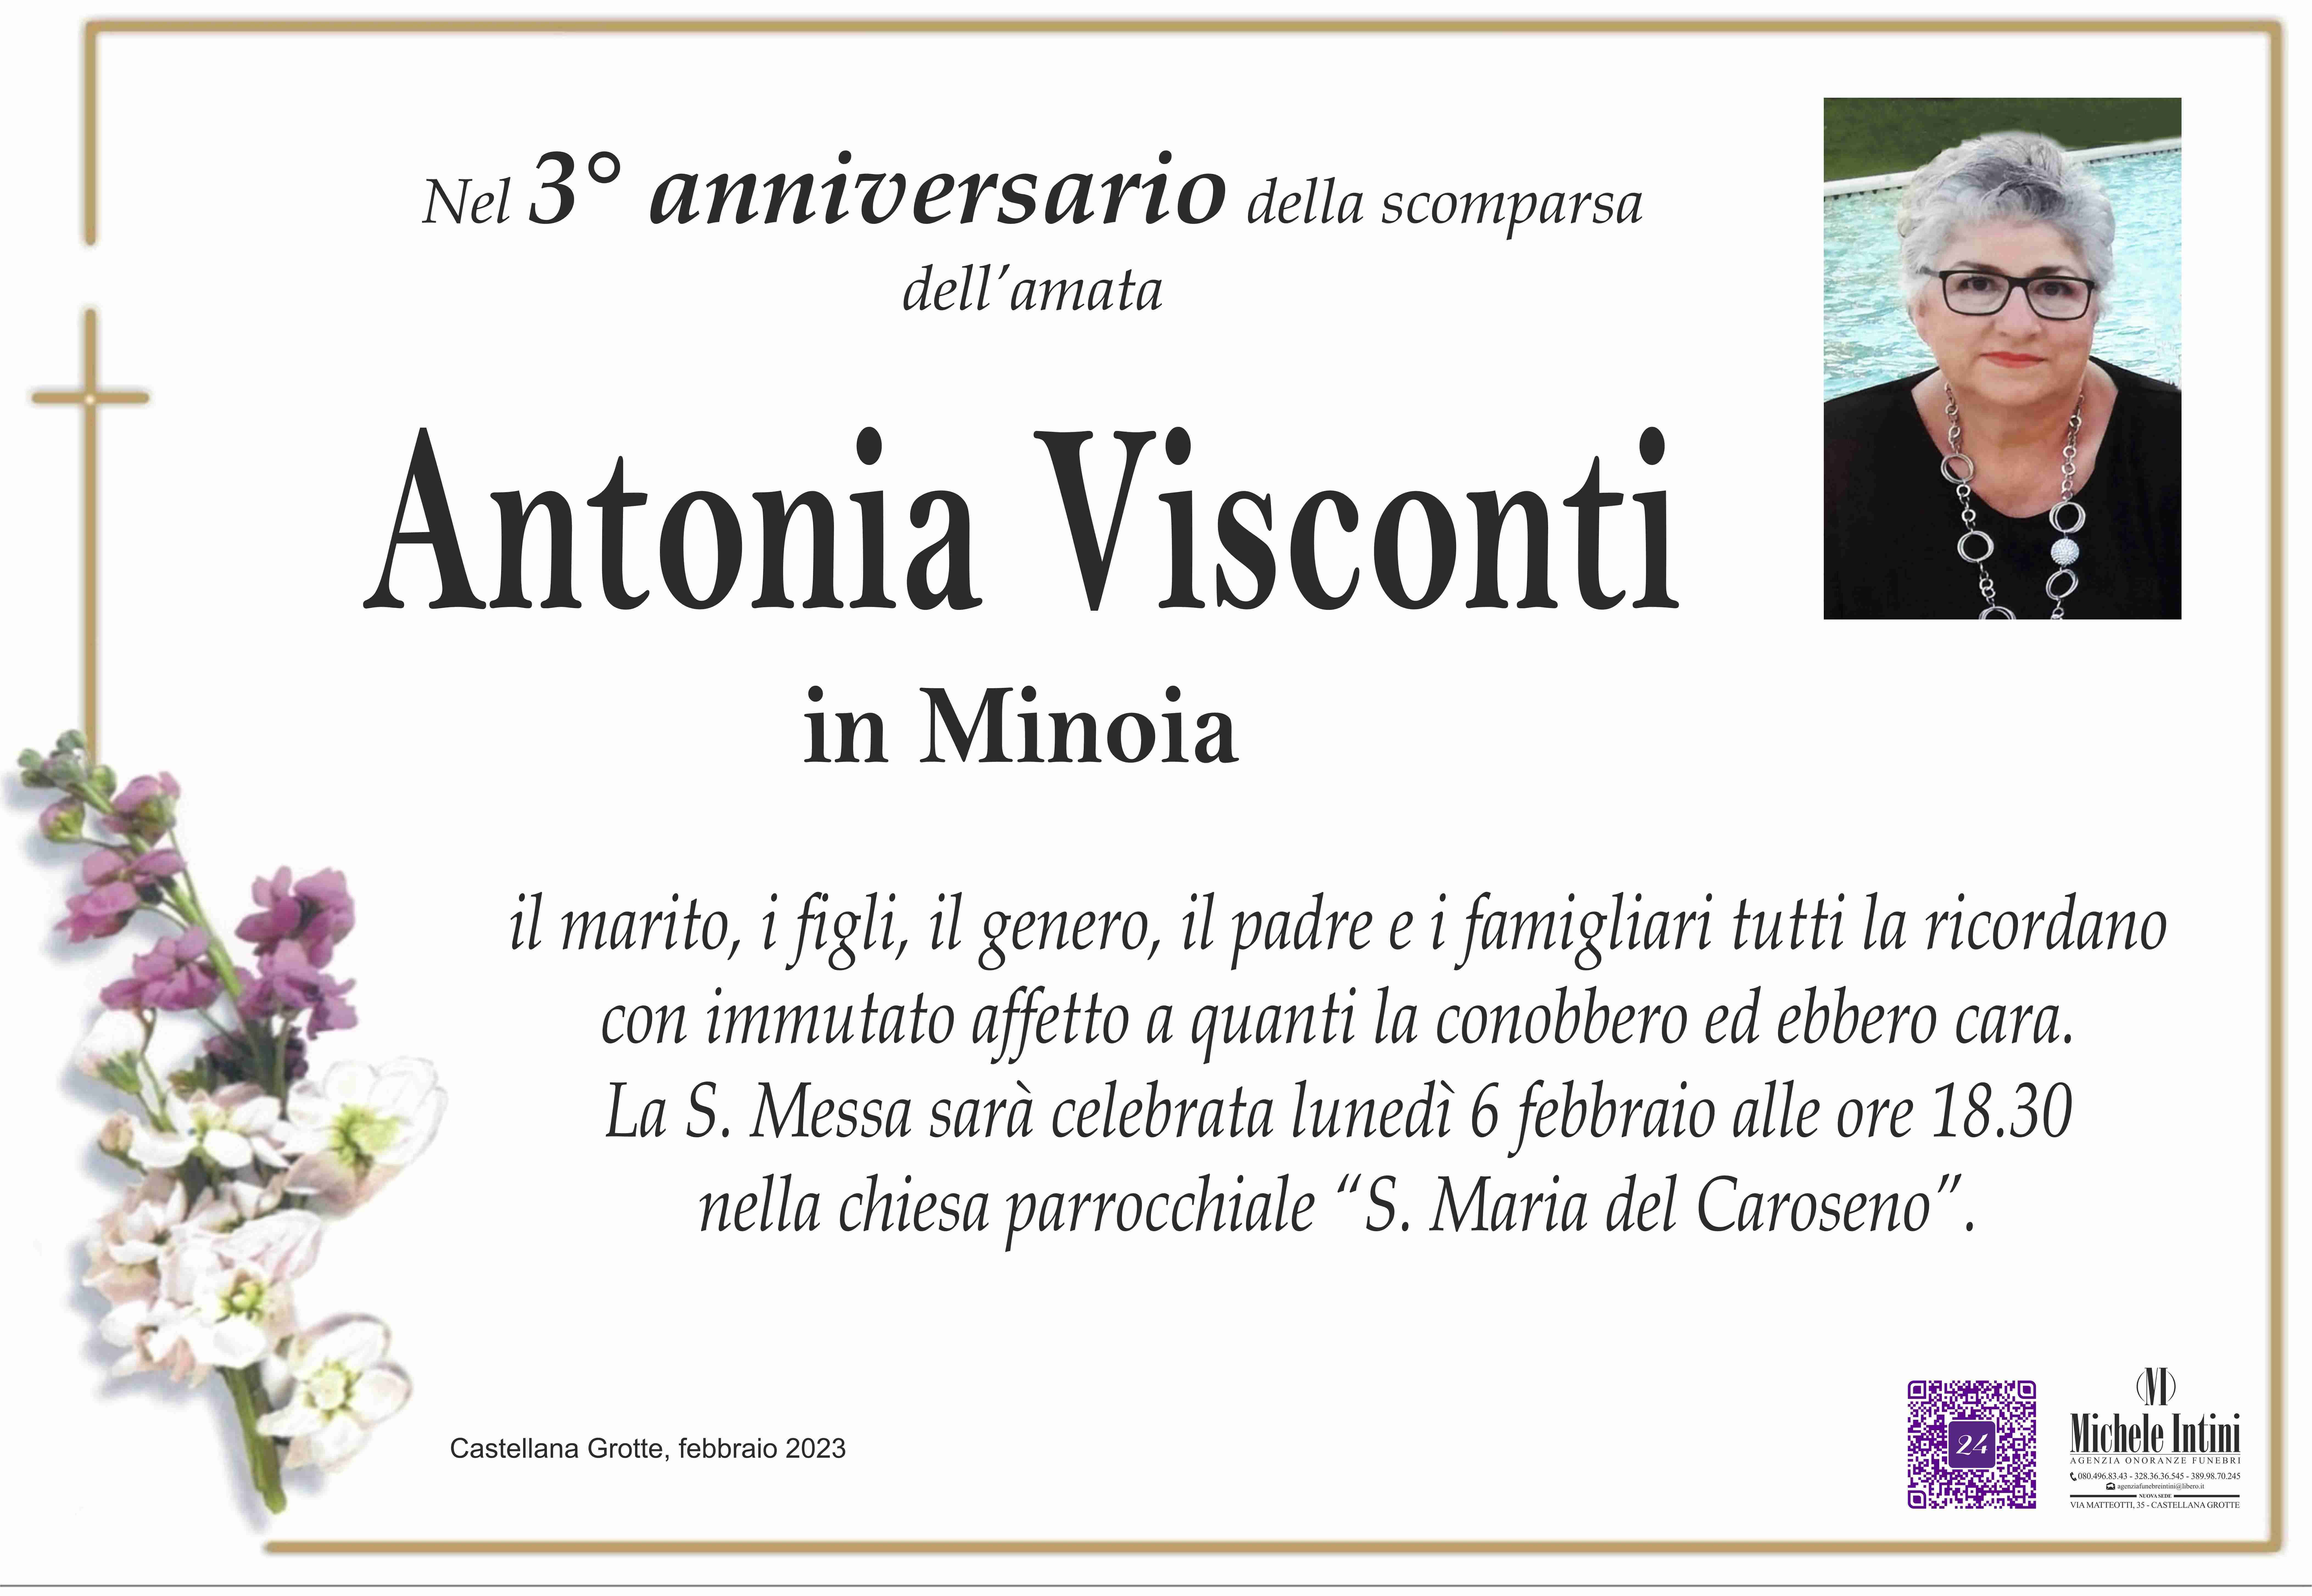 Antonia Visconti